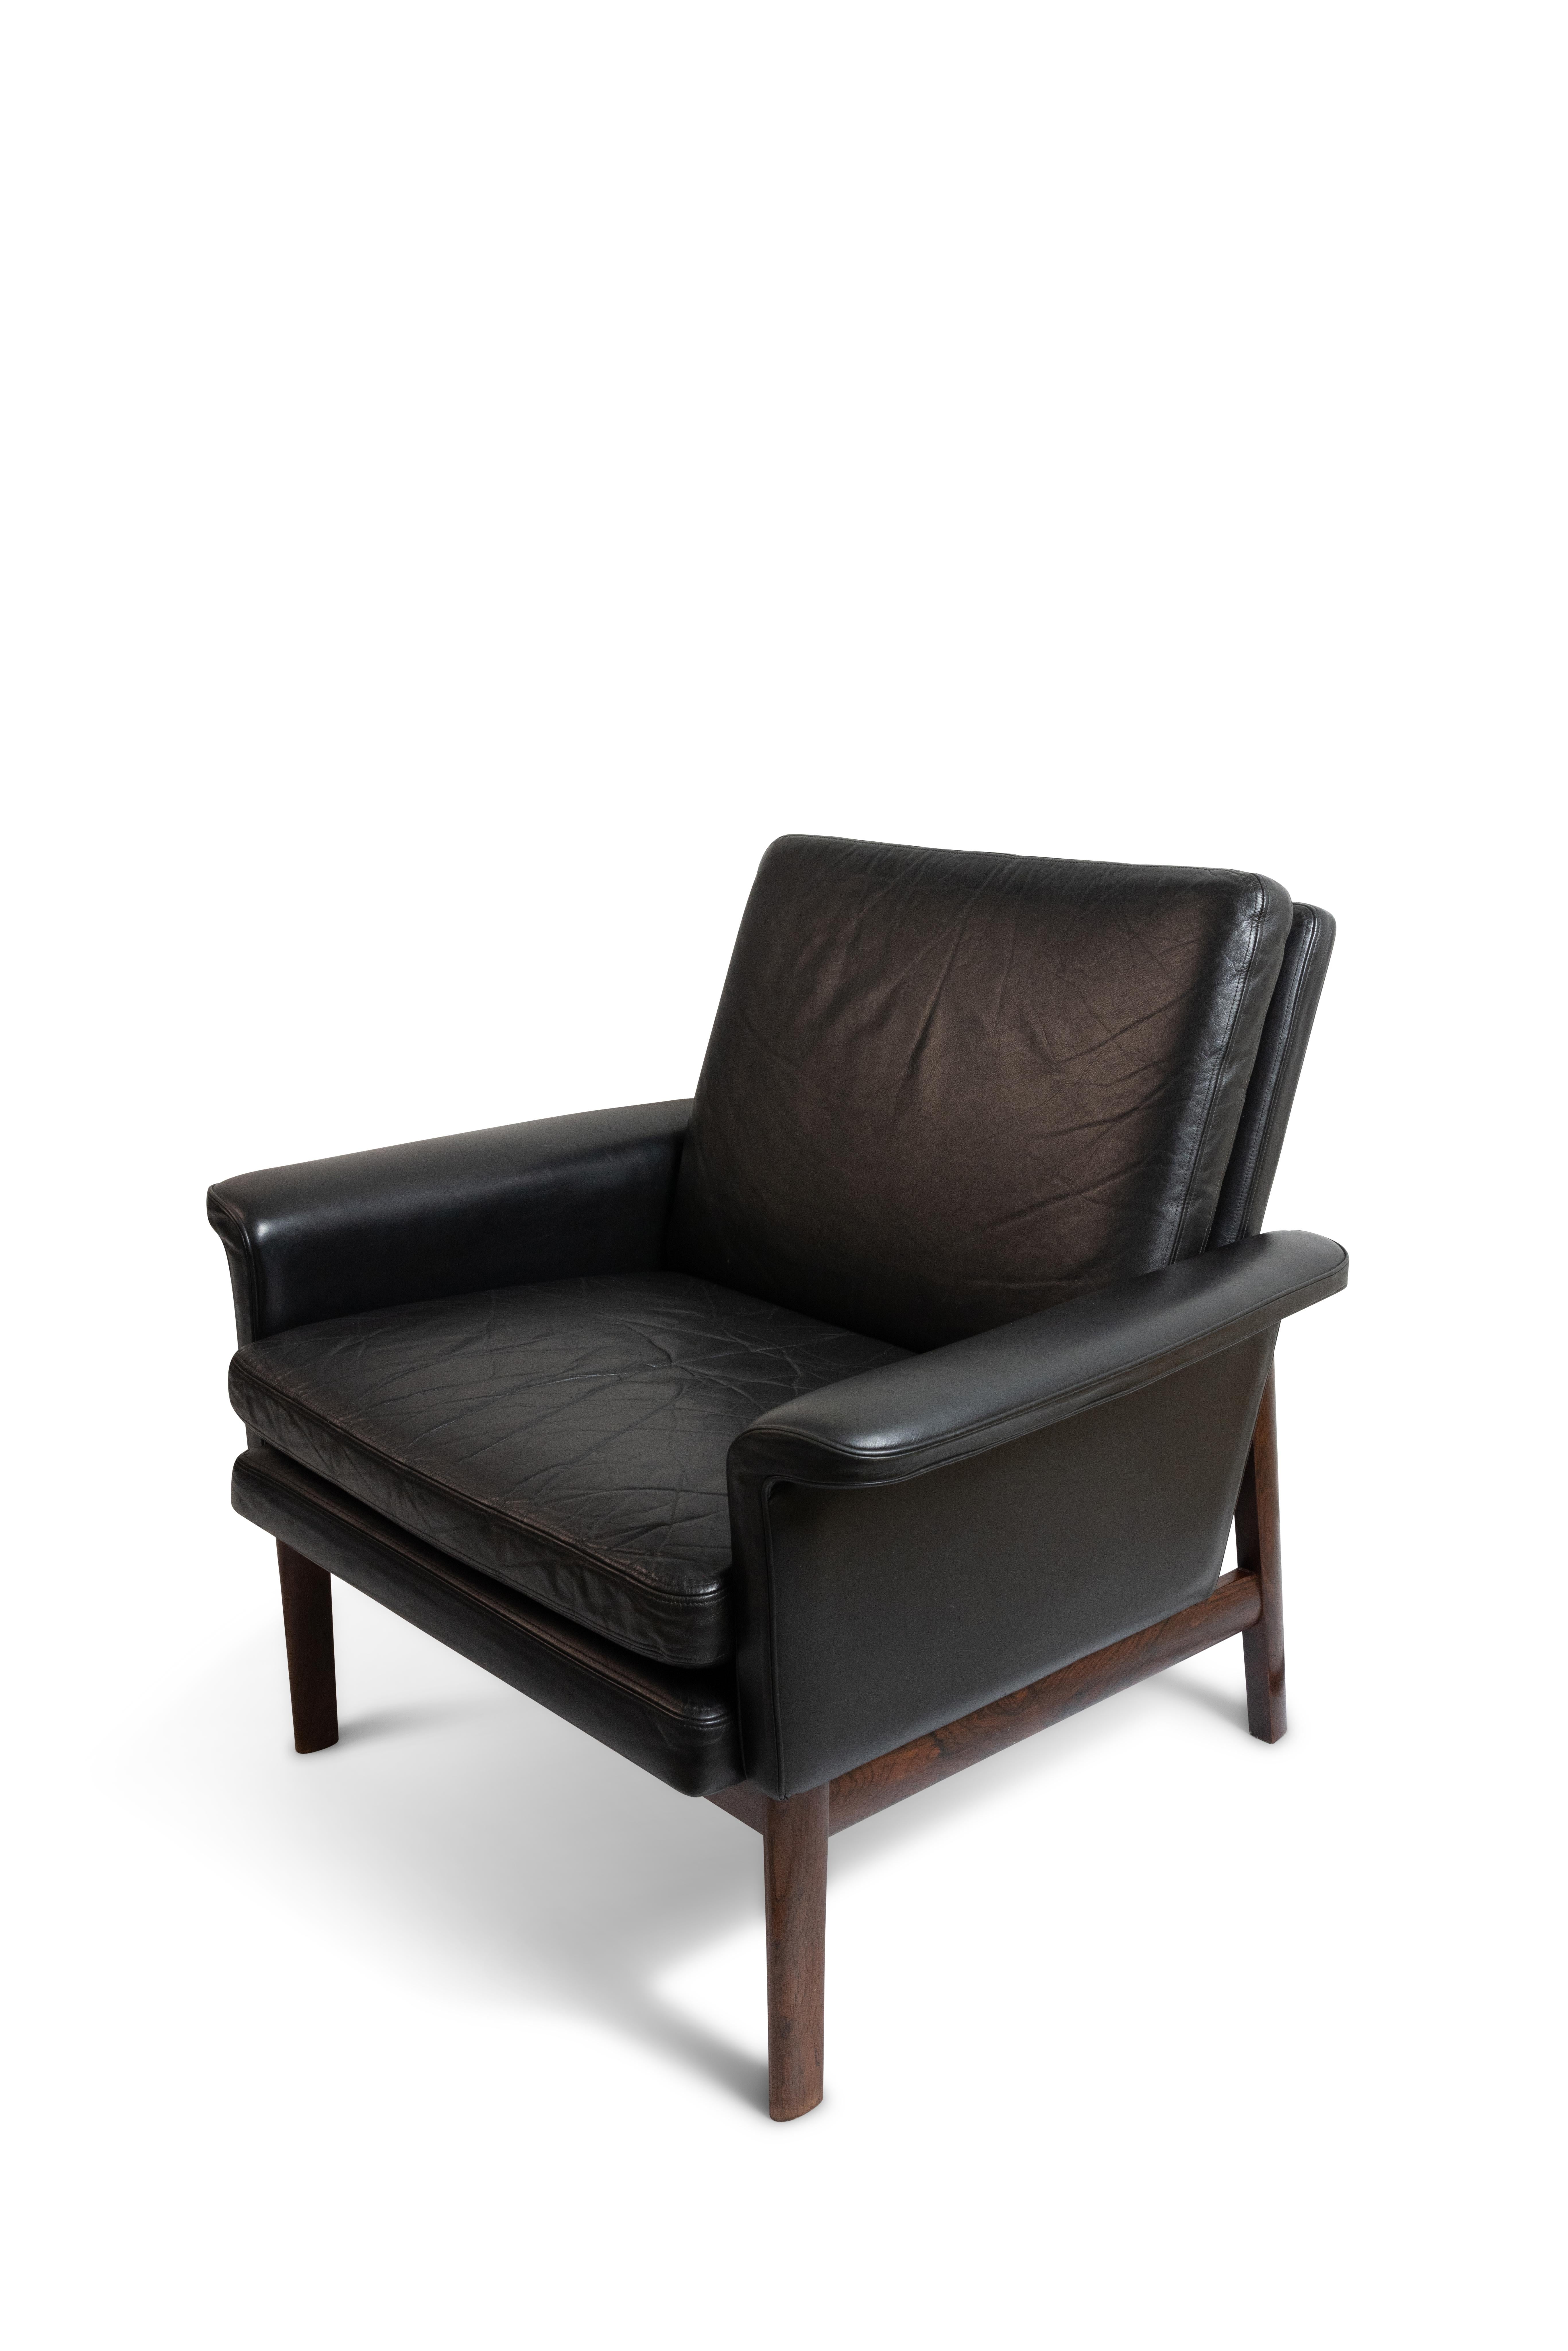 Finn Juhl Three Seat Sofa with Original Black Leather, Model 218/3, Denmark For Sale 5